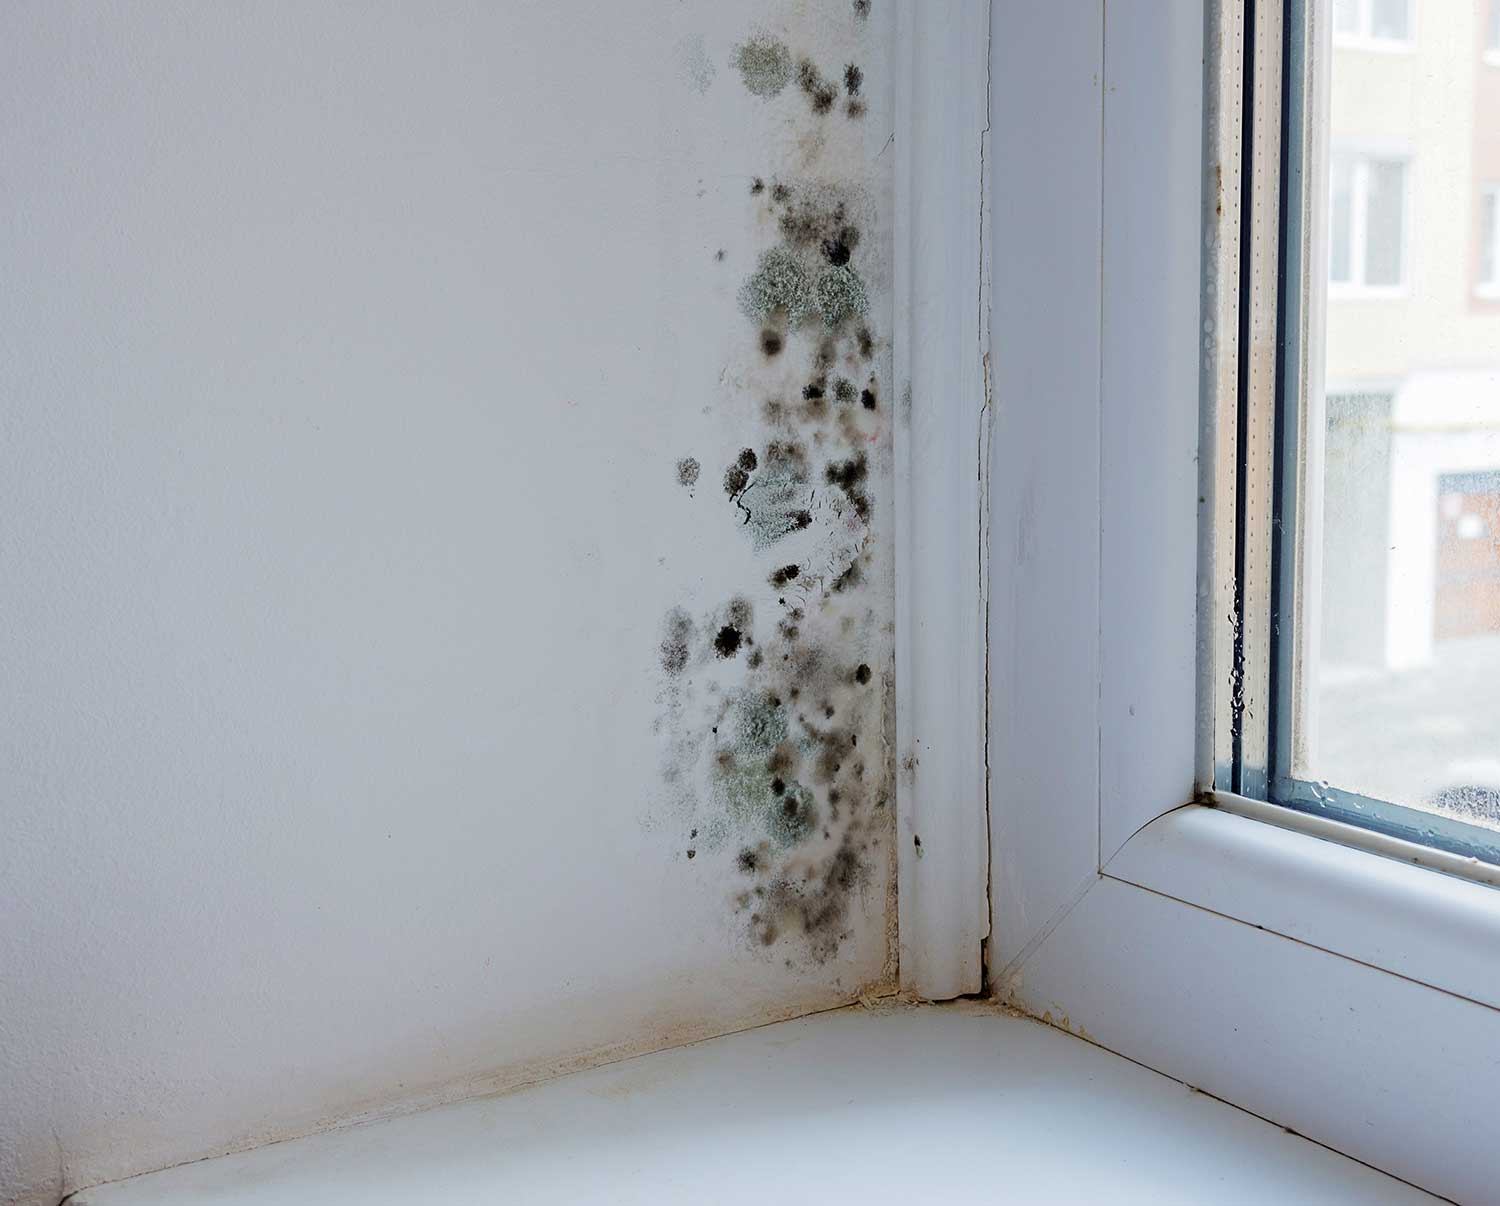 Black mold and fungus on wall near window